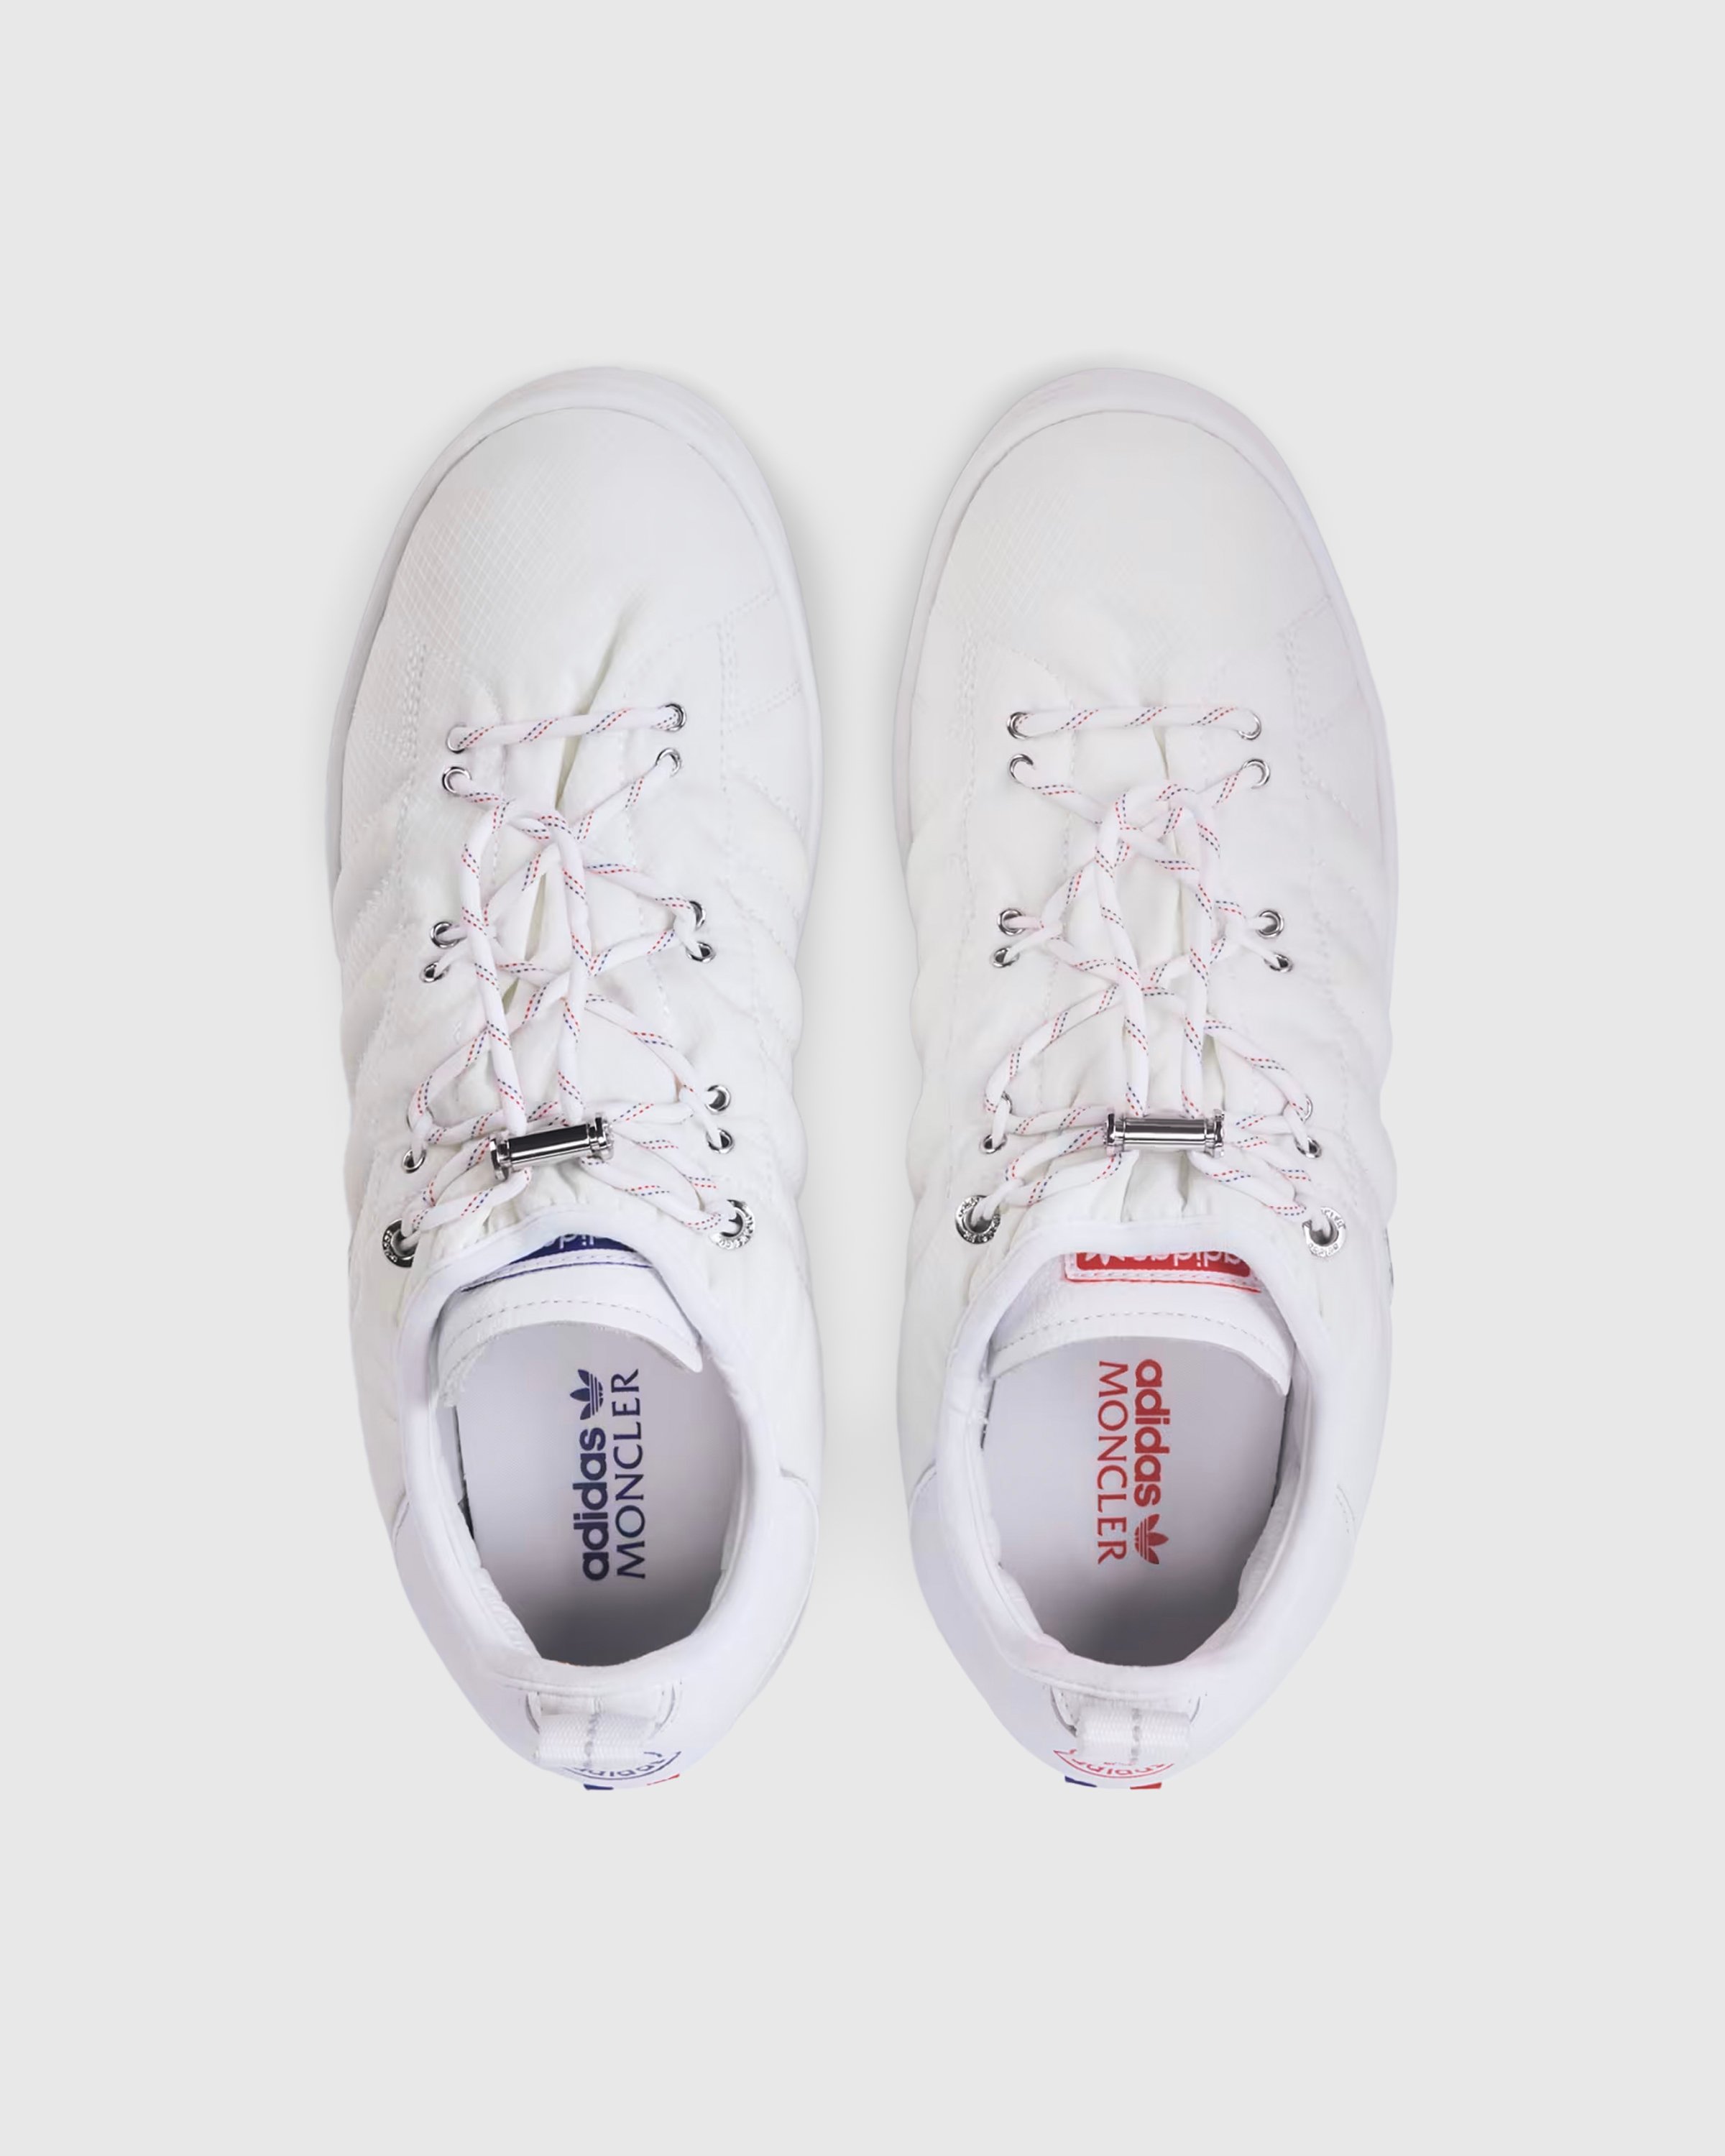 Moncler x adidas Originals - Campus Low Top Sneakers - Footwear - White - Image 3